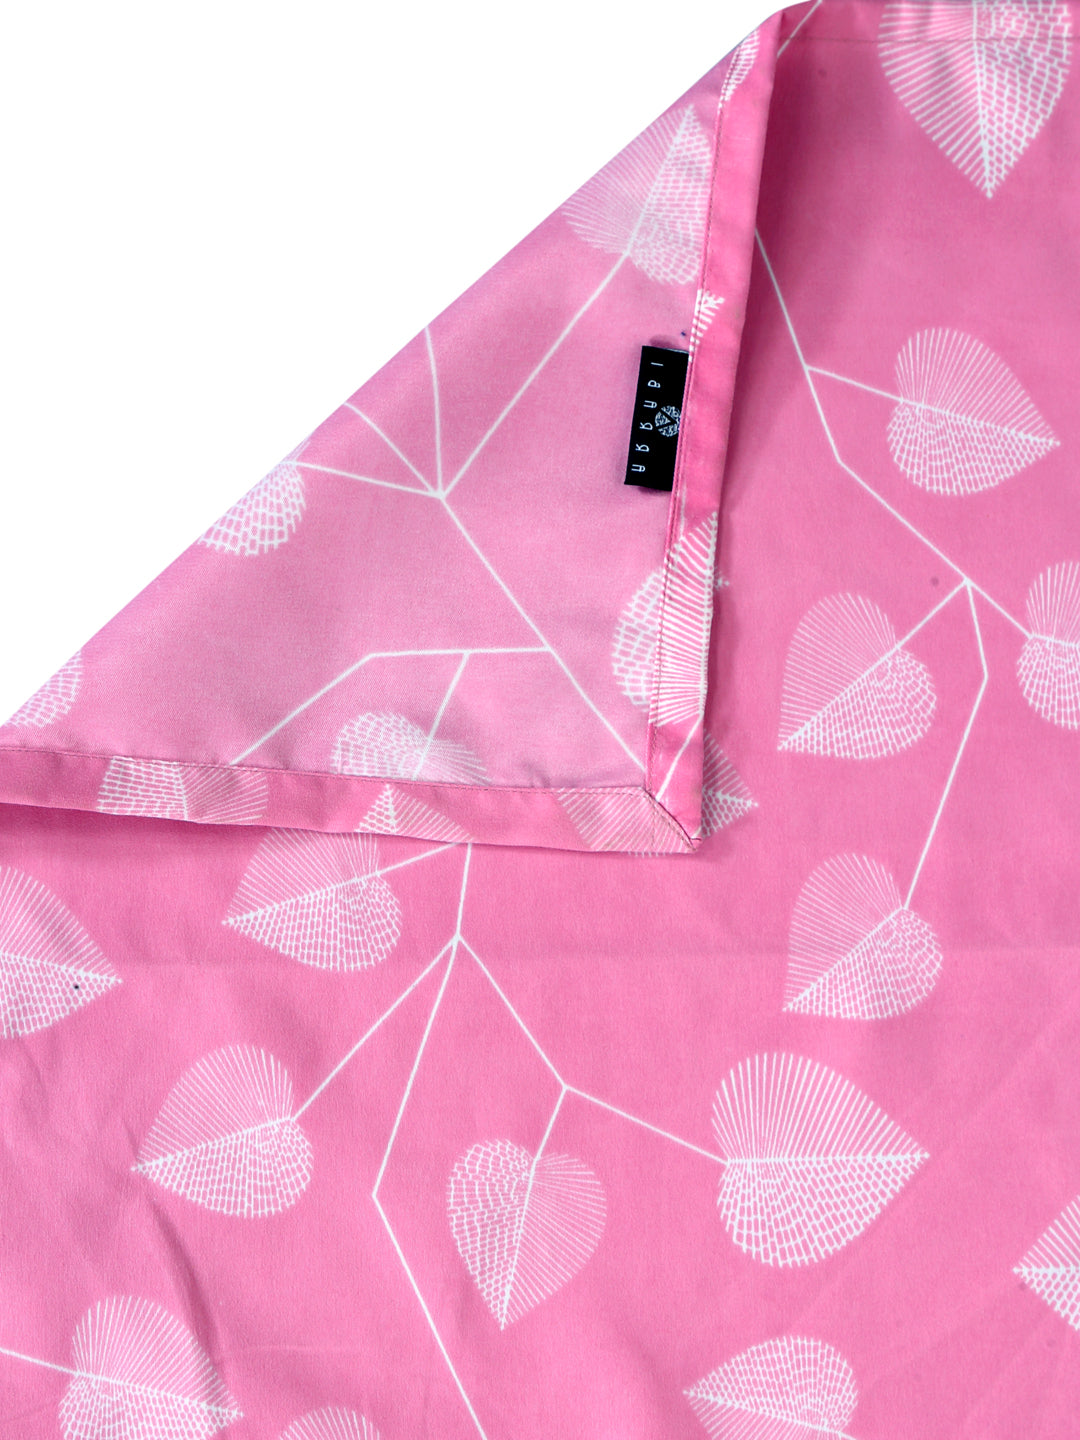 Arrabi Pink Floral TC Polycotton Double Size Bedsheet with 2 Pillow Cover (255 x 225 cm)